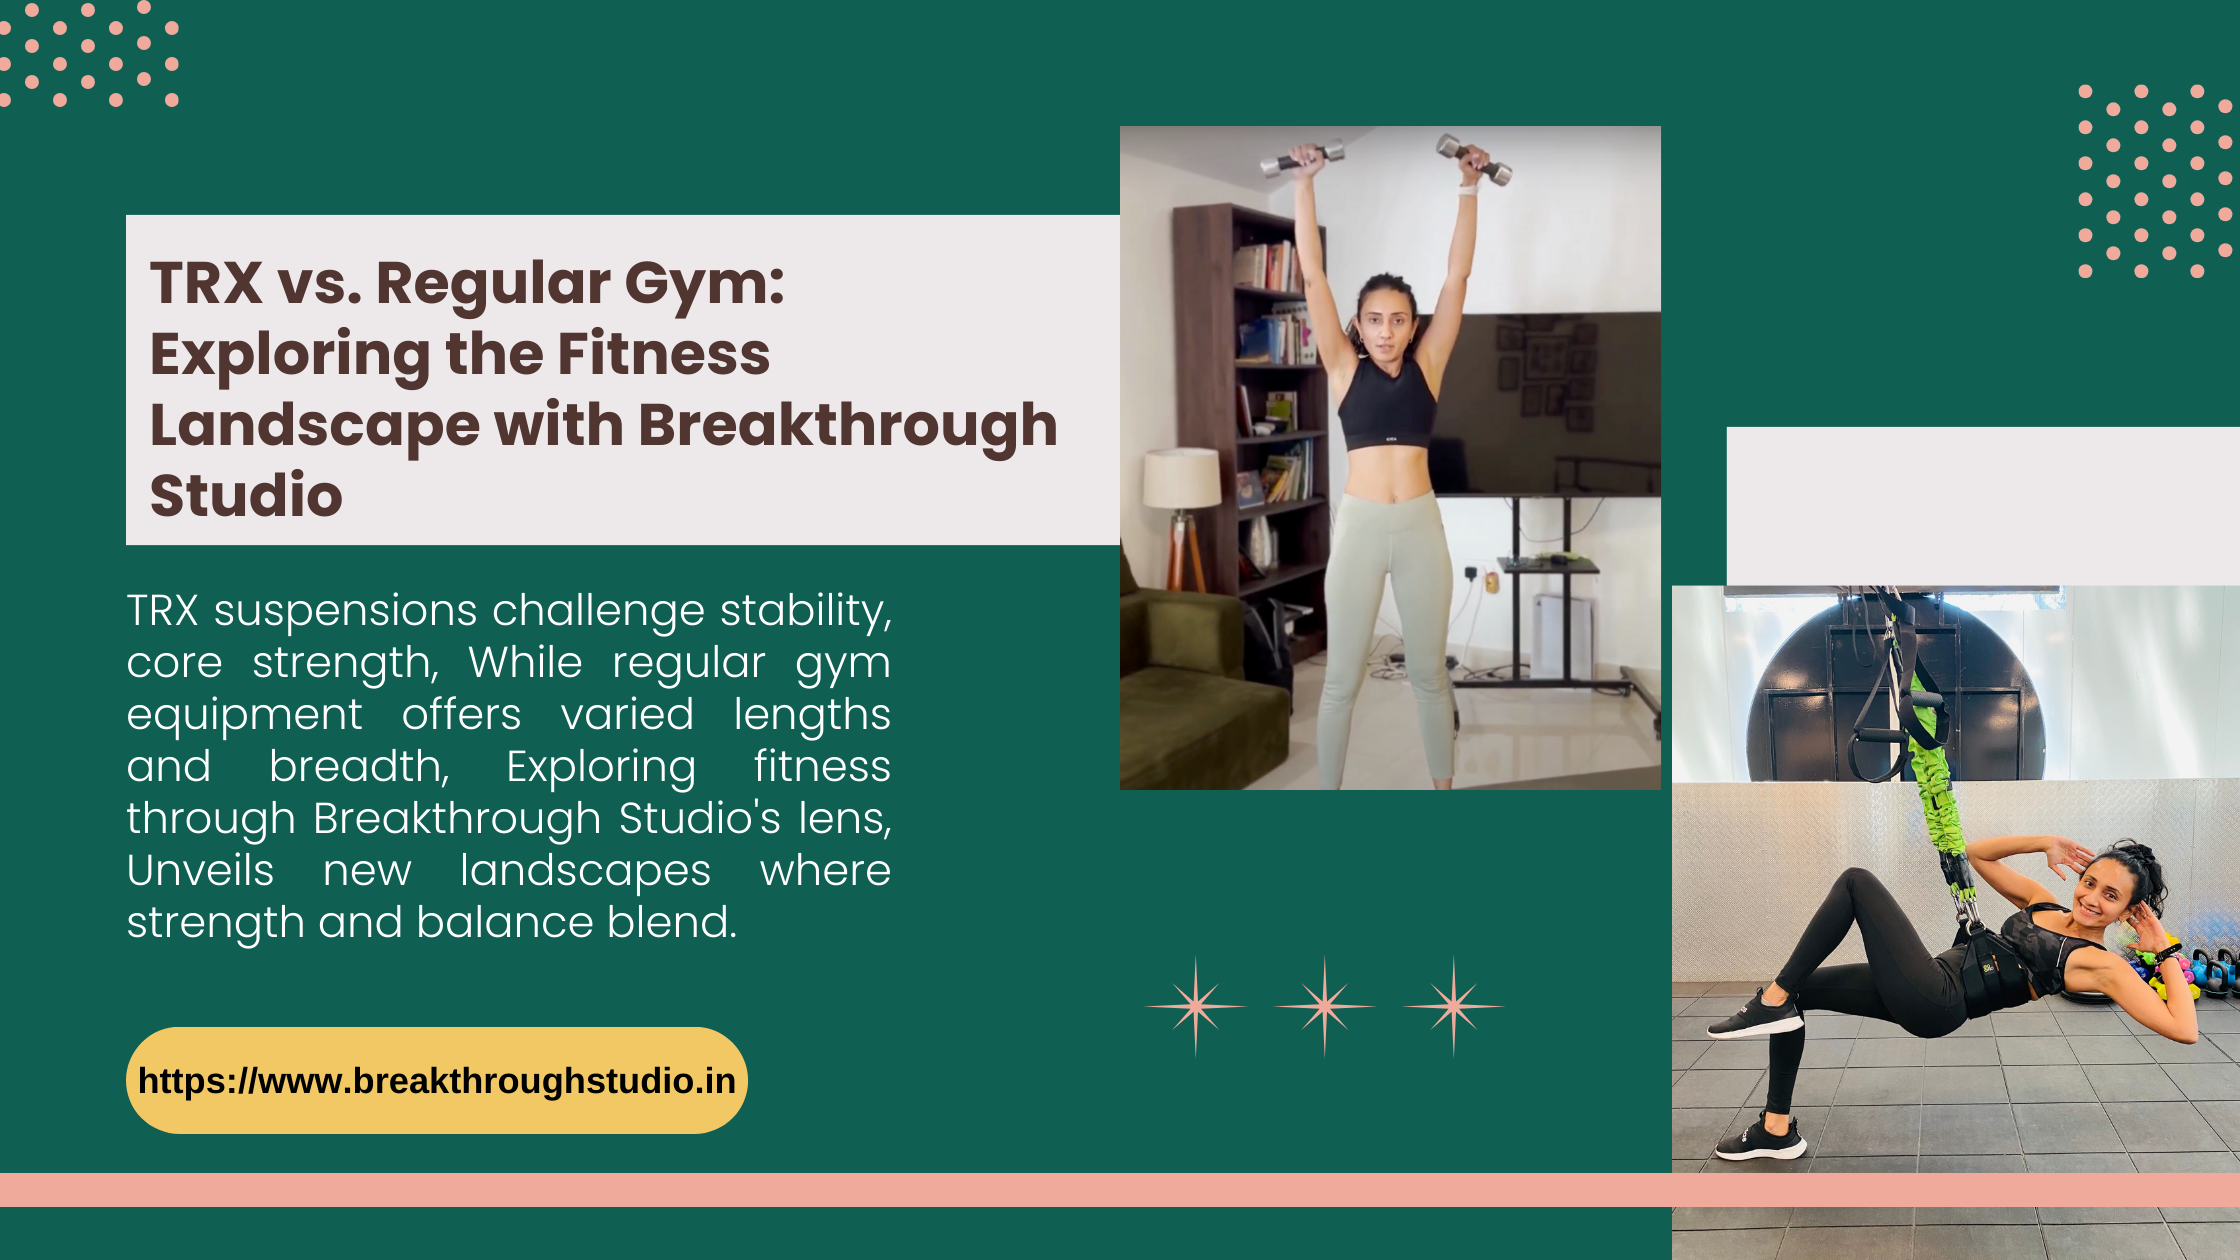 TRX vs. Regular Gym: Exploring the Fitness Landscape with Breakthrough Studio